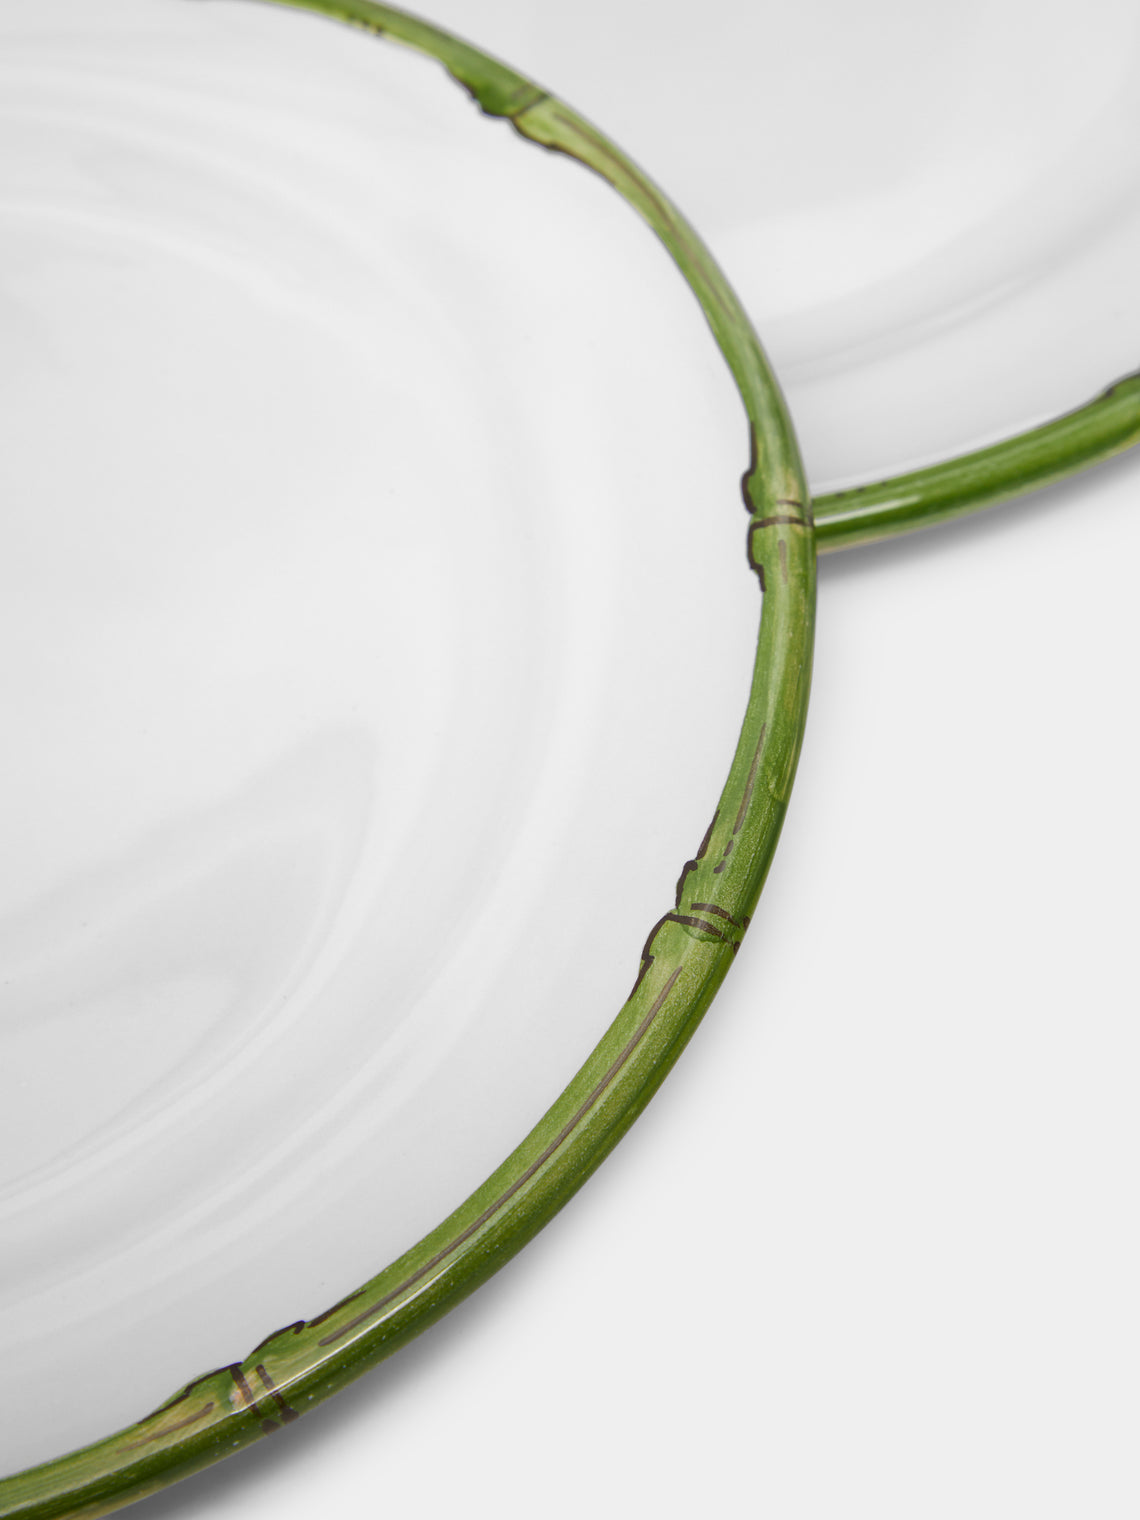 Z.d.G - Ramatuelle Bamboo Side Plate (Set of 2) - Green - ABASK